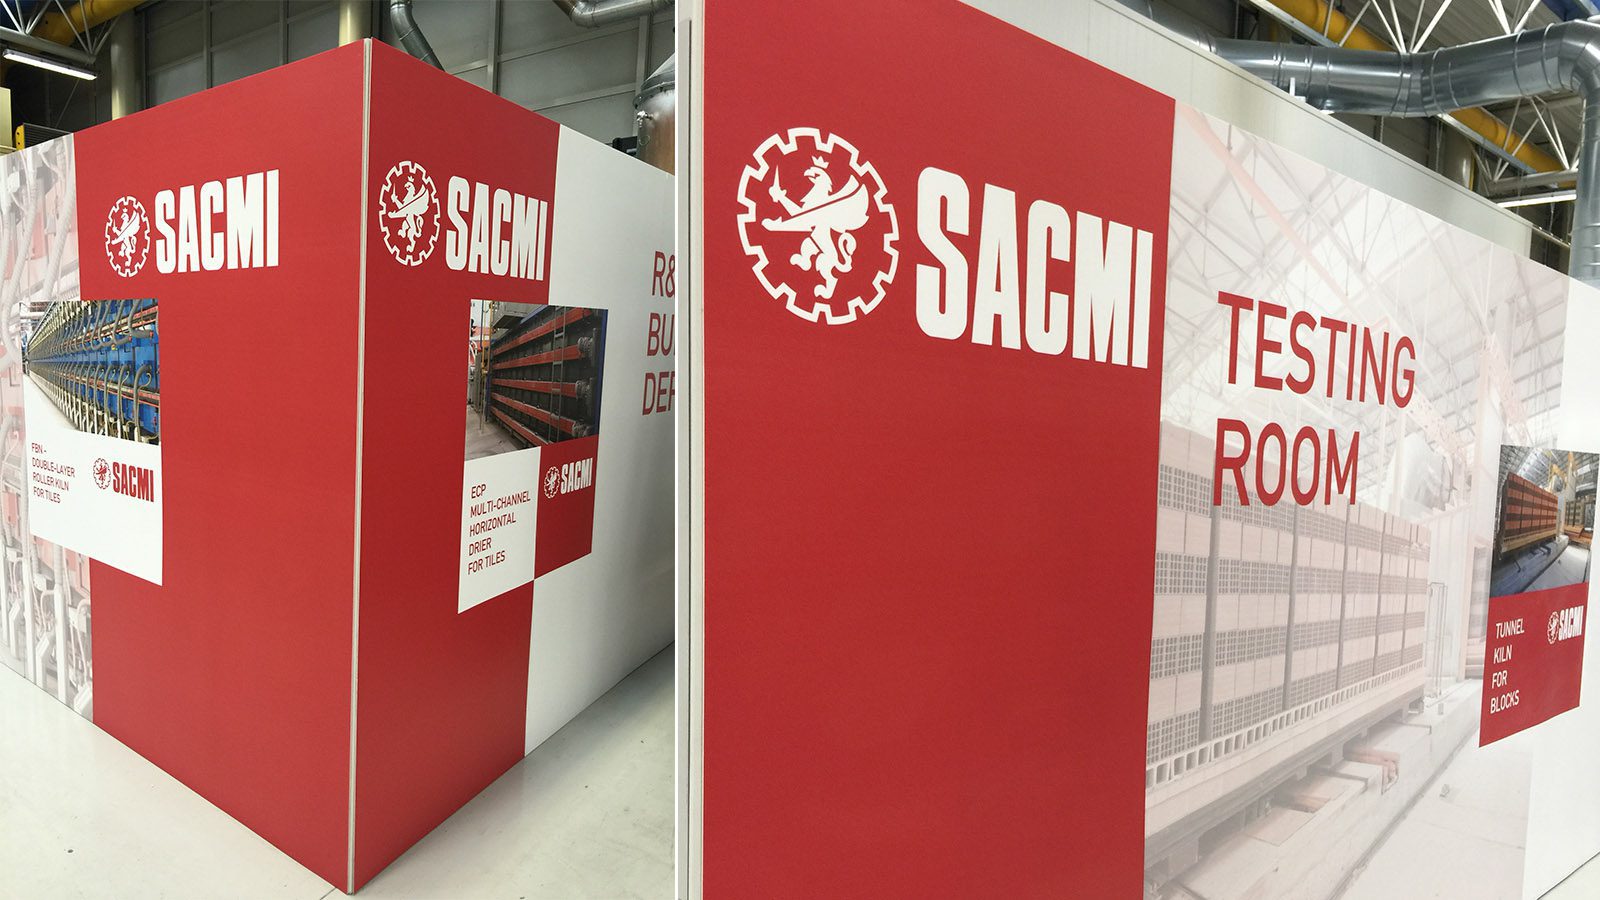 sacmi-lab-2015-testing-room